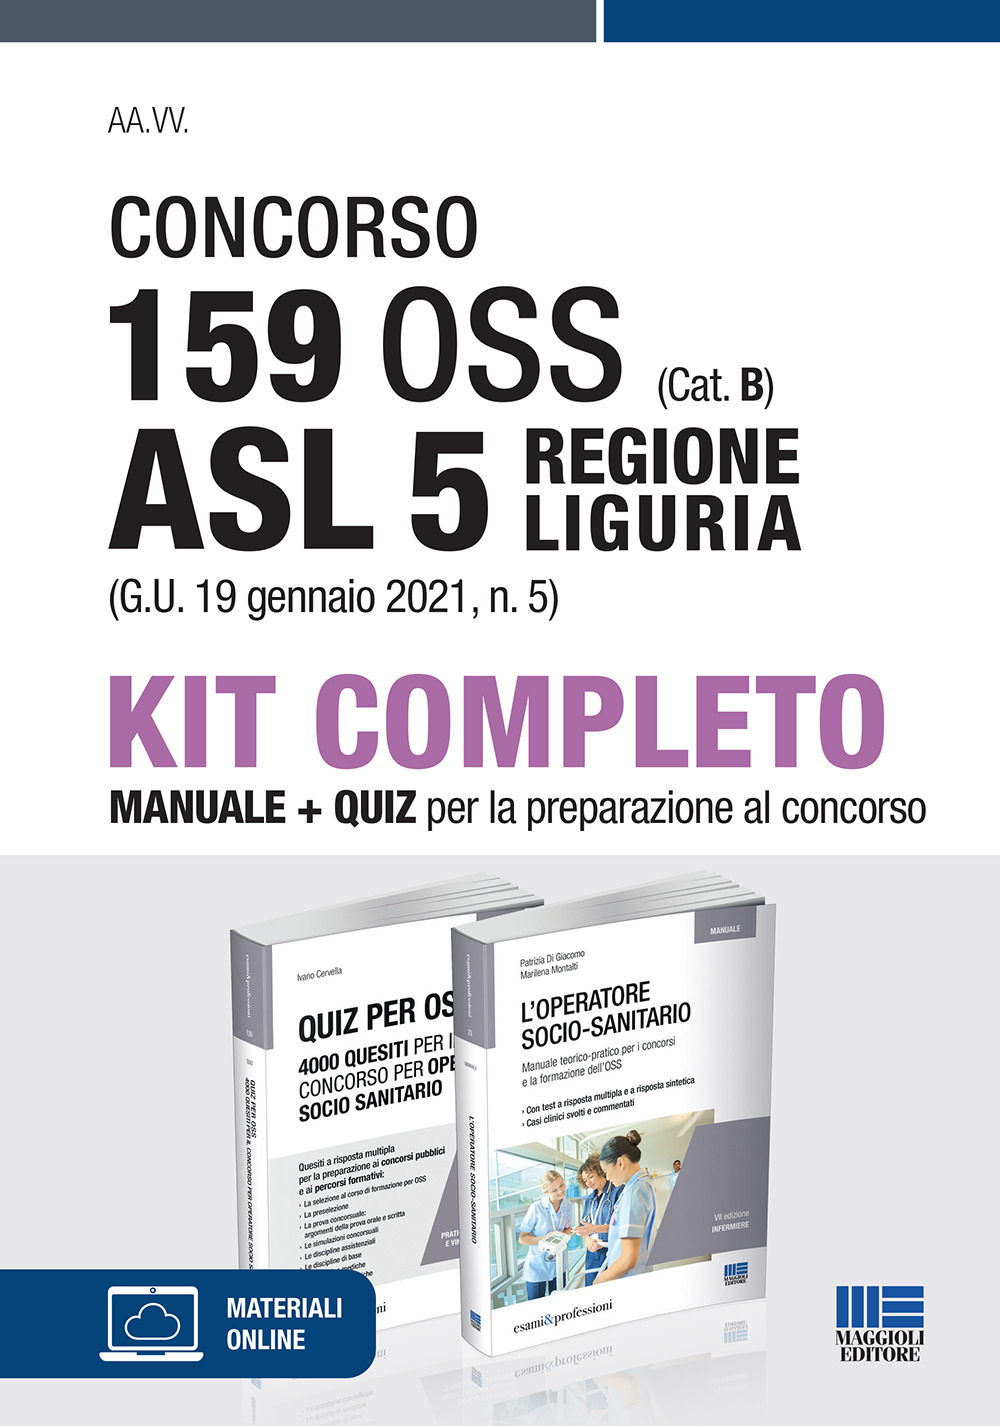 Concorso 159 OSS (Cat. B) ASL 5 Regione Liguria (G.U. 19 gennaio 2021, n. 5). Kit completo